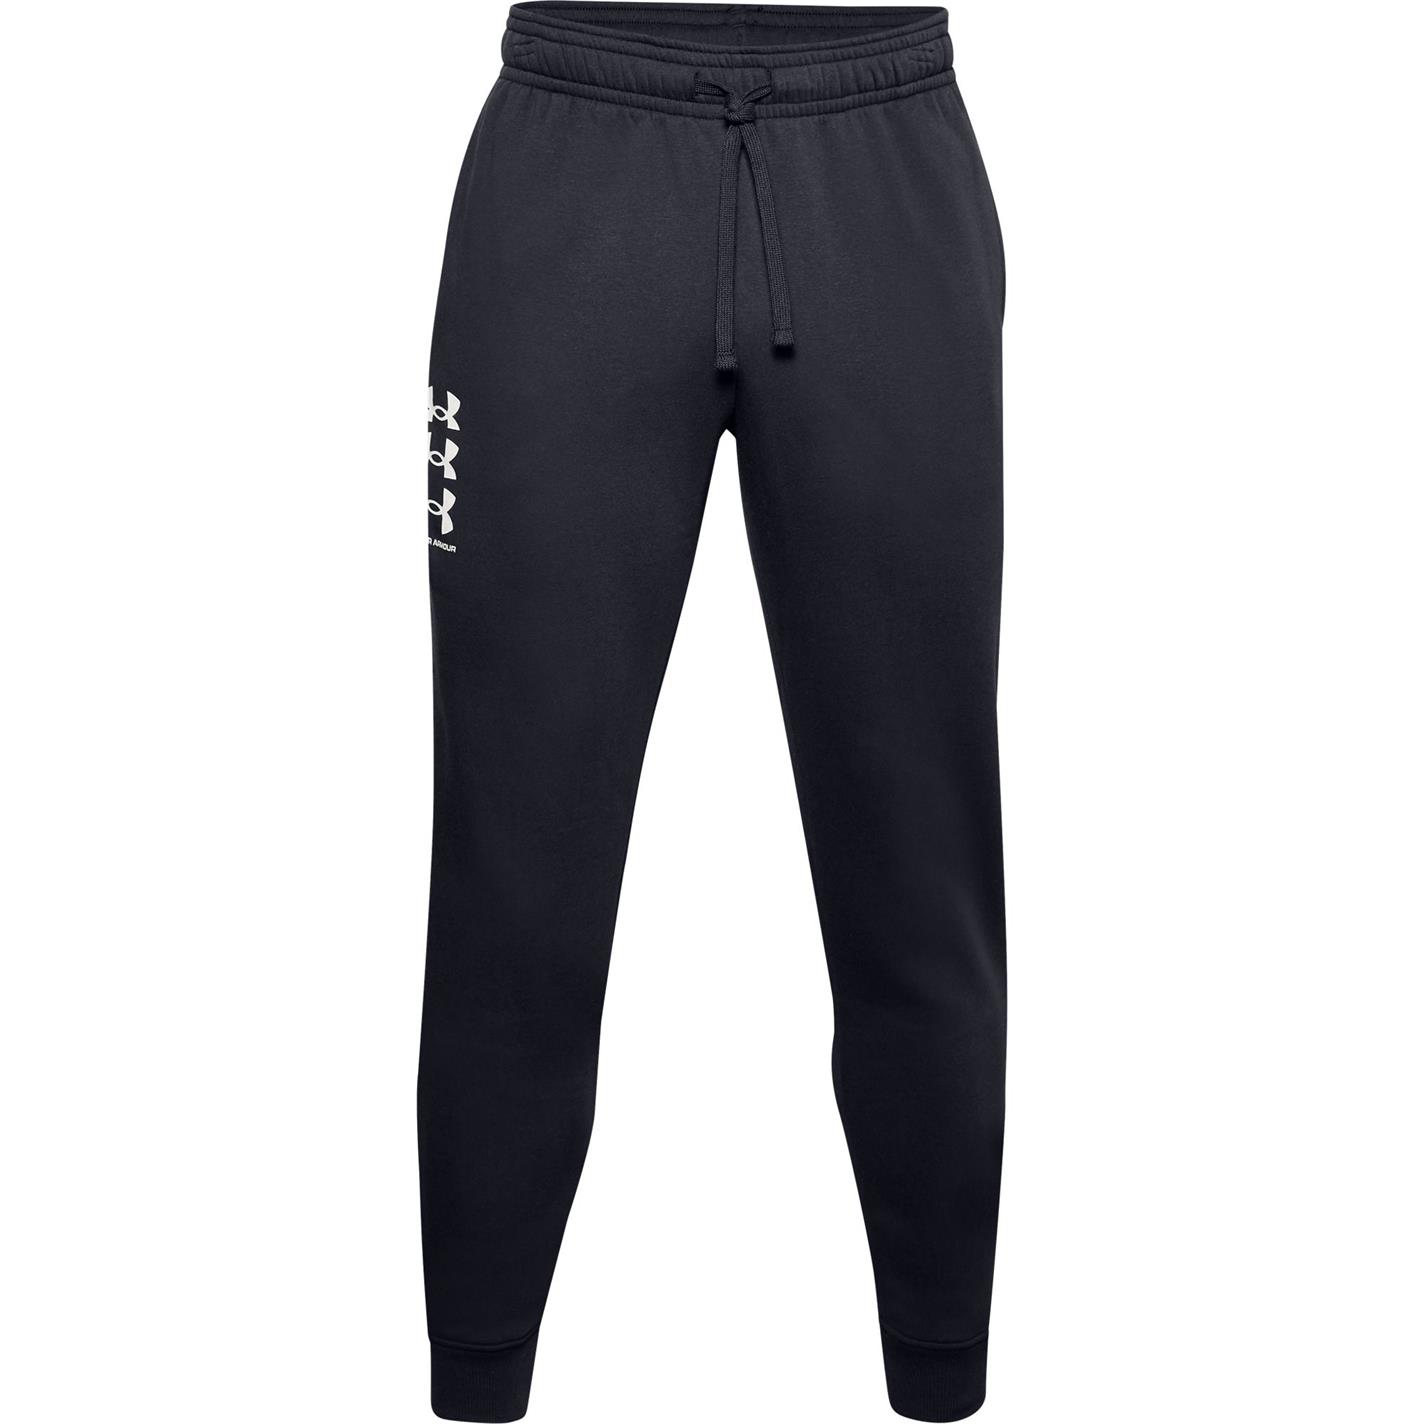 Bluze Pantaloni jogging Under Armour Rival Logo pentru Barbati negru